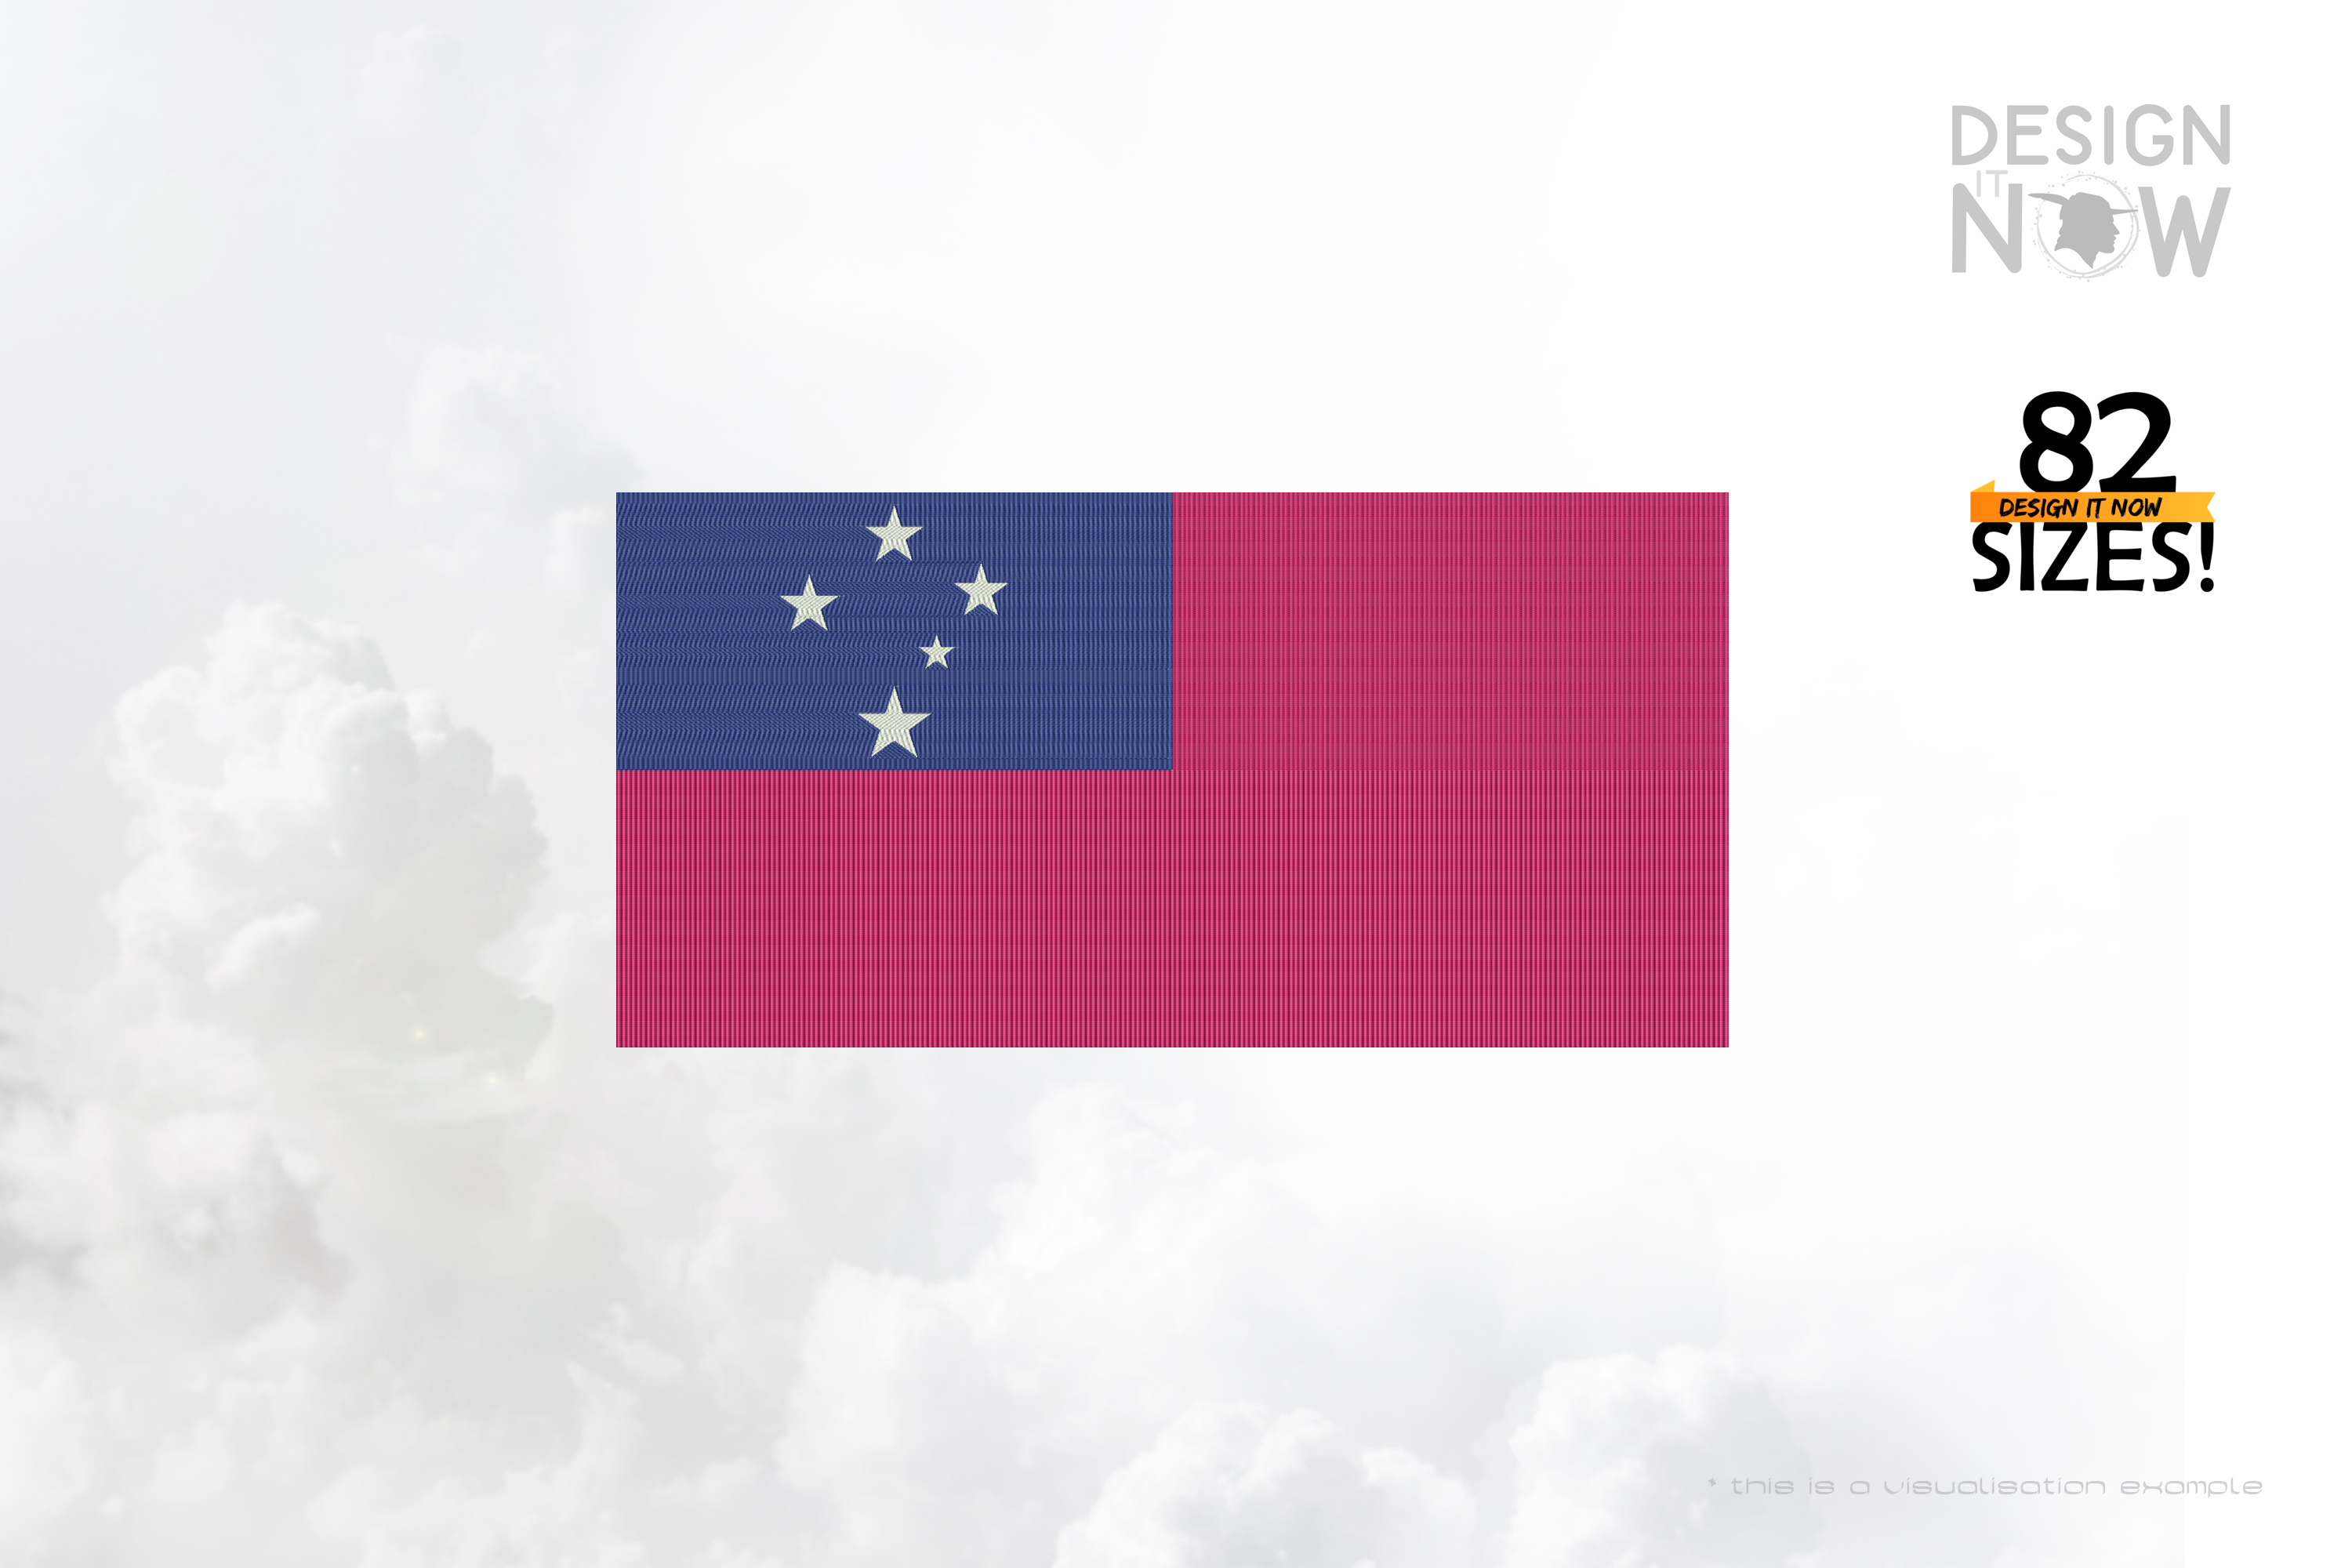 Samoa-Independent State of Samoa